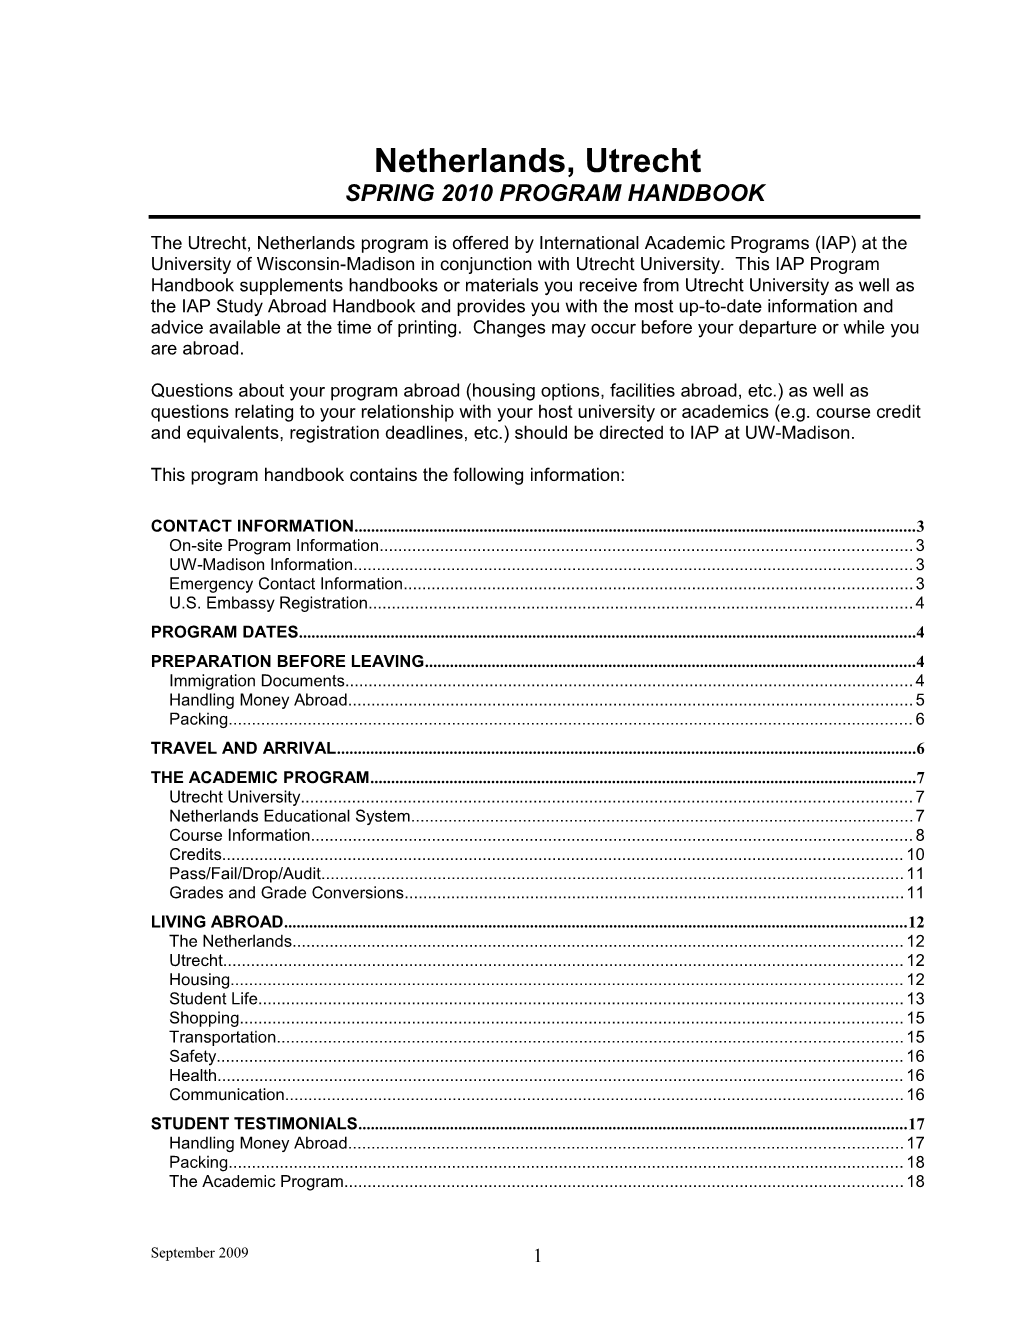 Netherlands, Utrechtspring 2010 Program Handbook